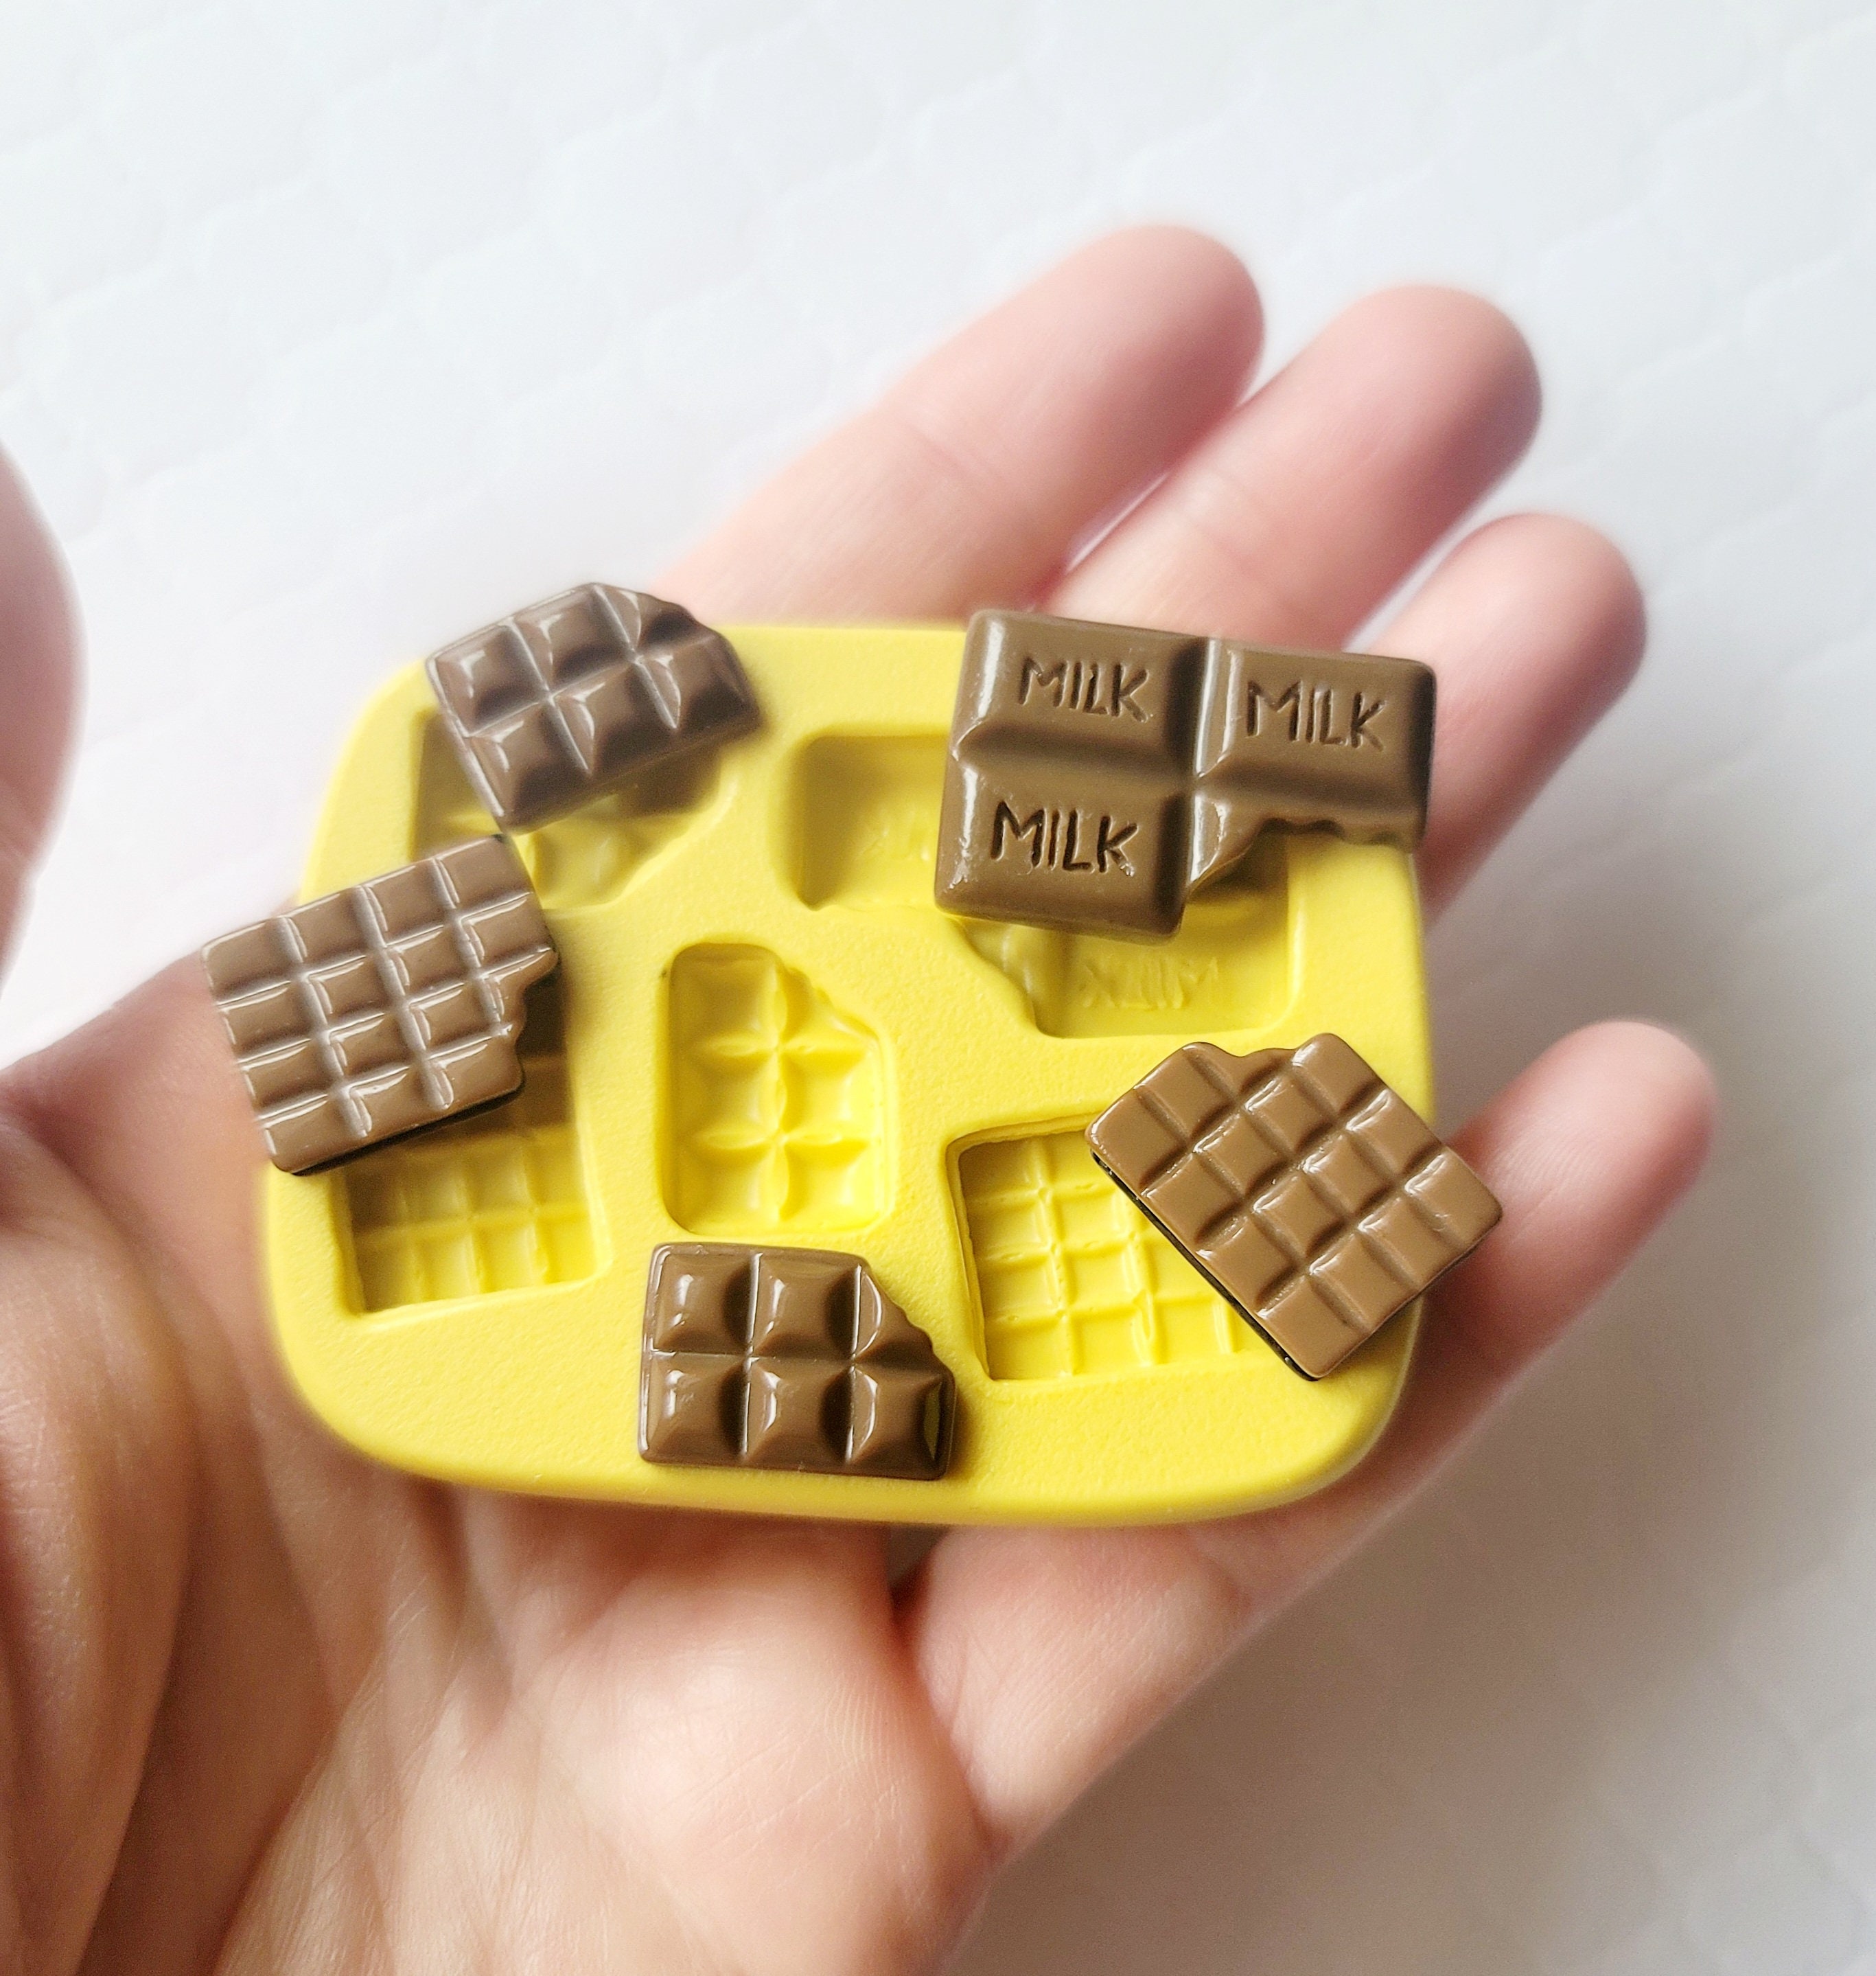 Mini-bar Chocolate / Lattice Chocolate Silicone Mold / 12 cavities.